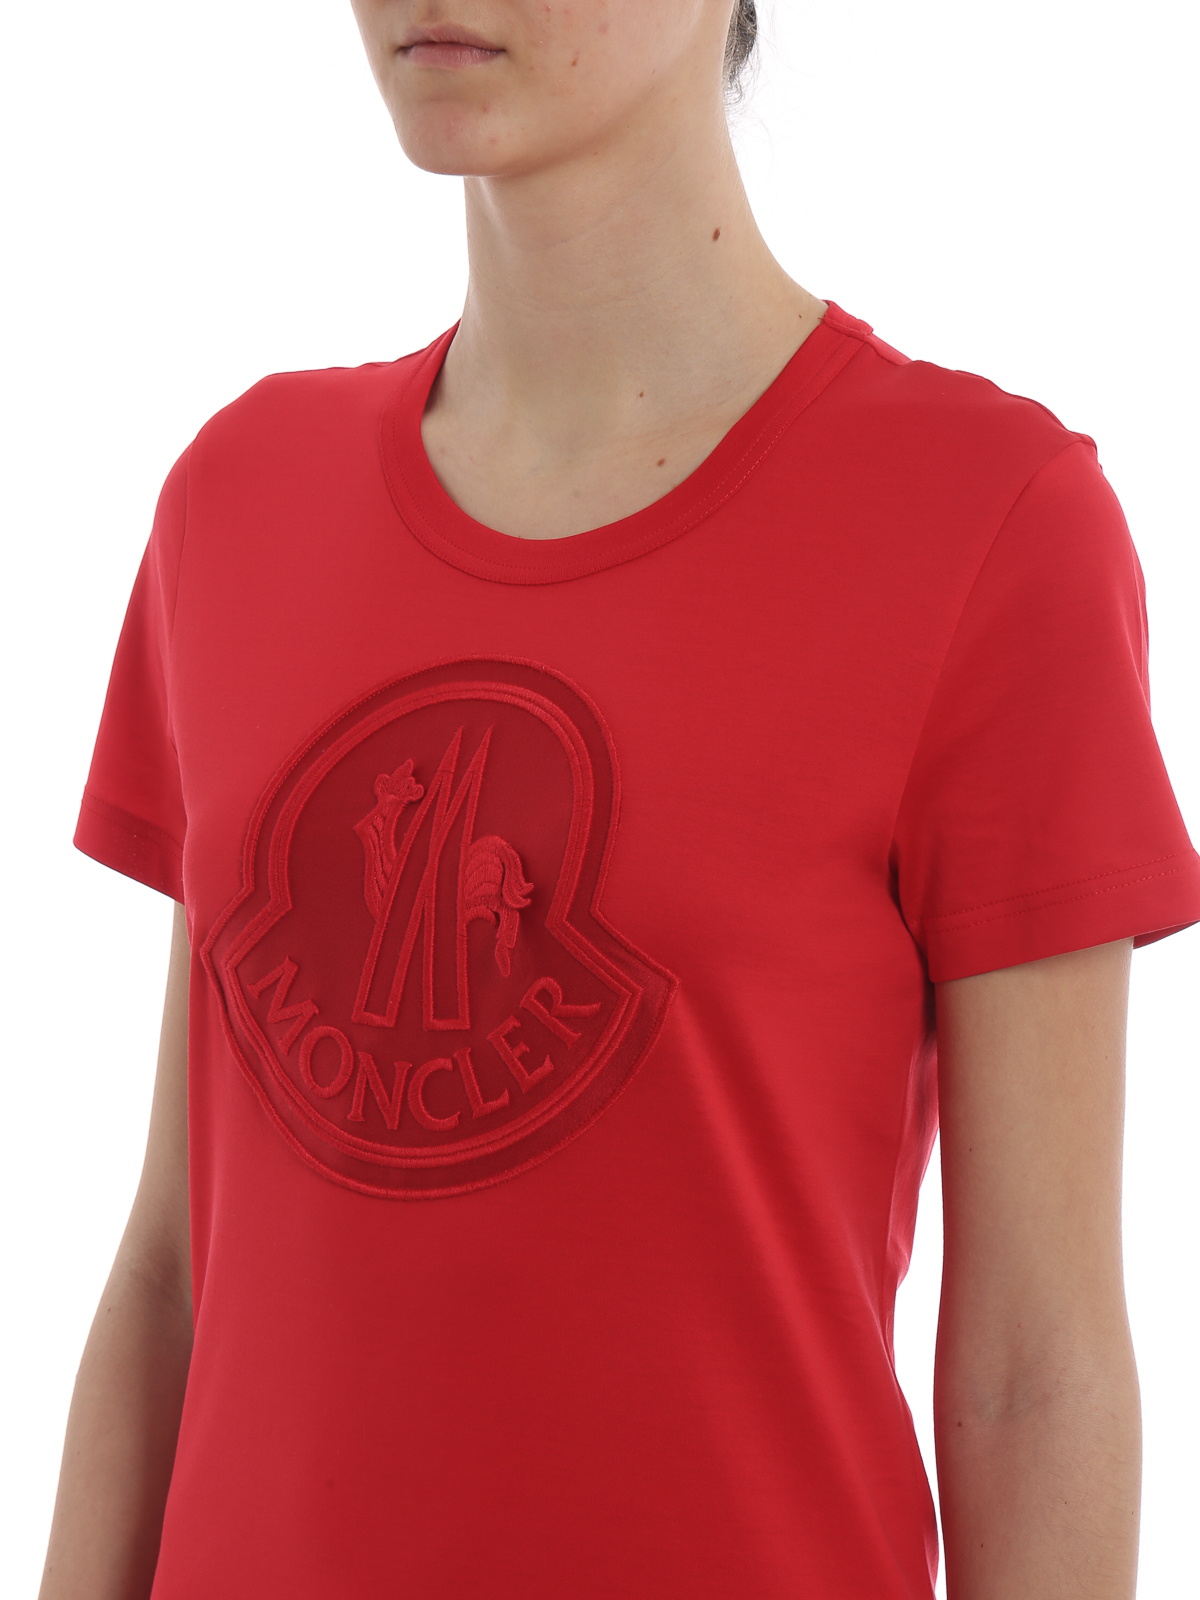 Tシャツ Moncler - Tシャツ - 赤 - E109380629008390X45C